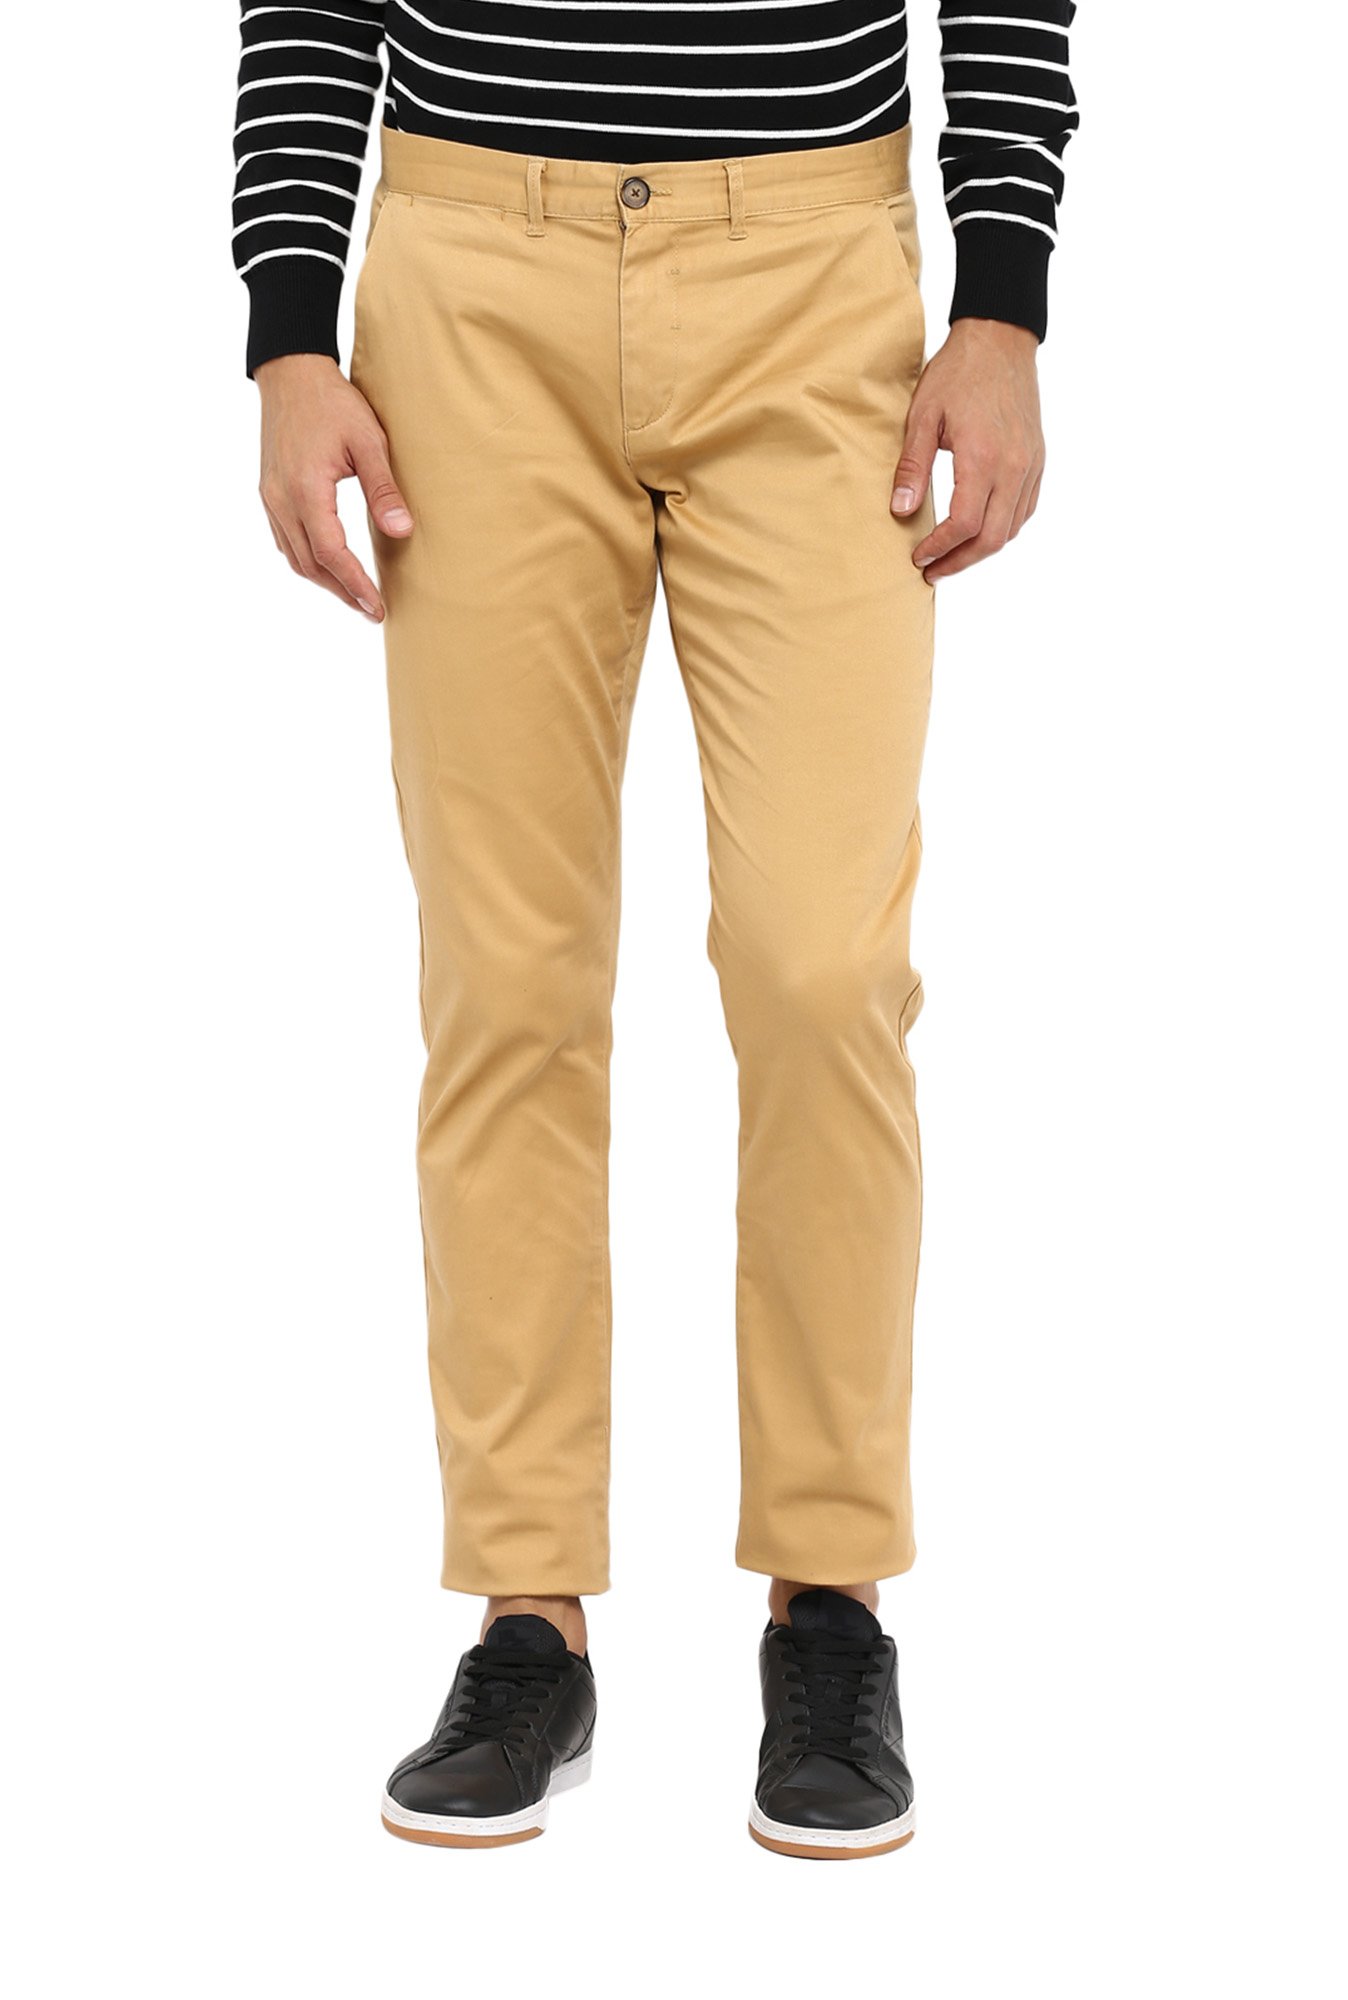 Buy Killer Navy Mid Rise Flat Front Trousers for Men Online  Tata CLiQ